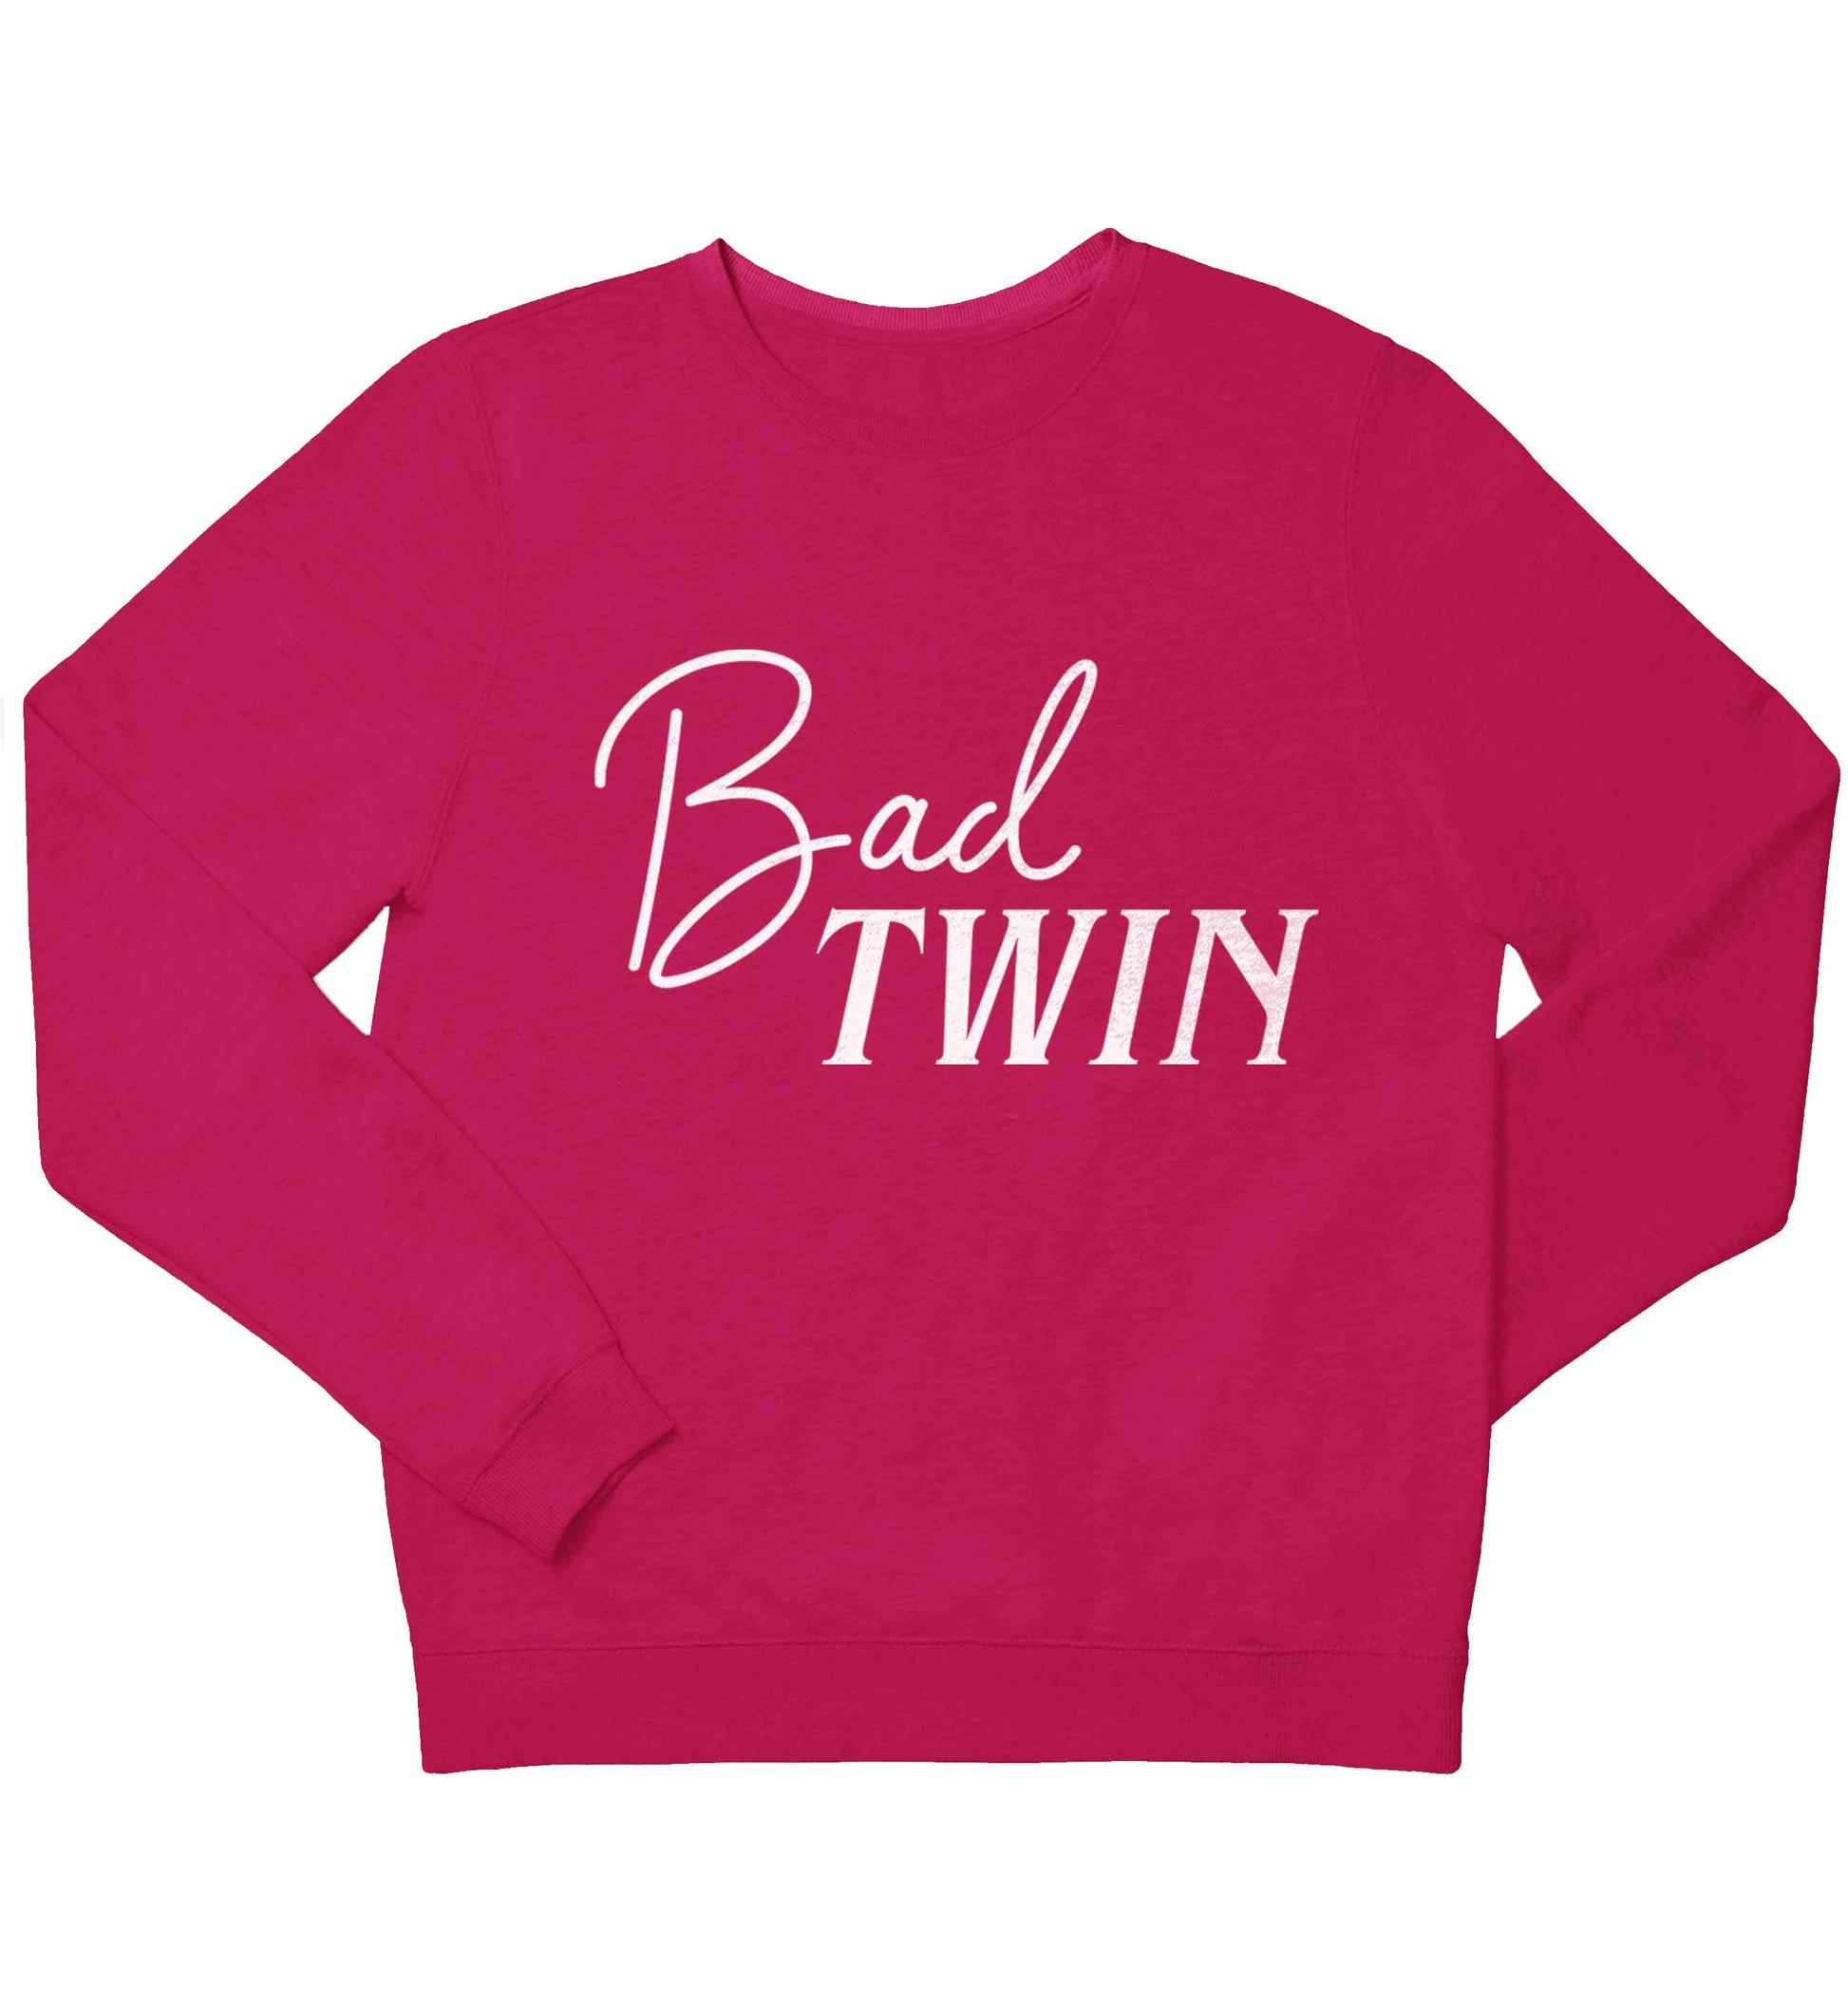 Bad twin children's pink sweater 12-13 Years